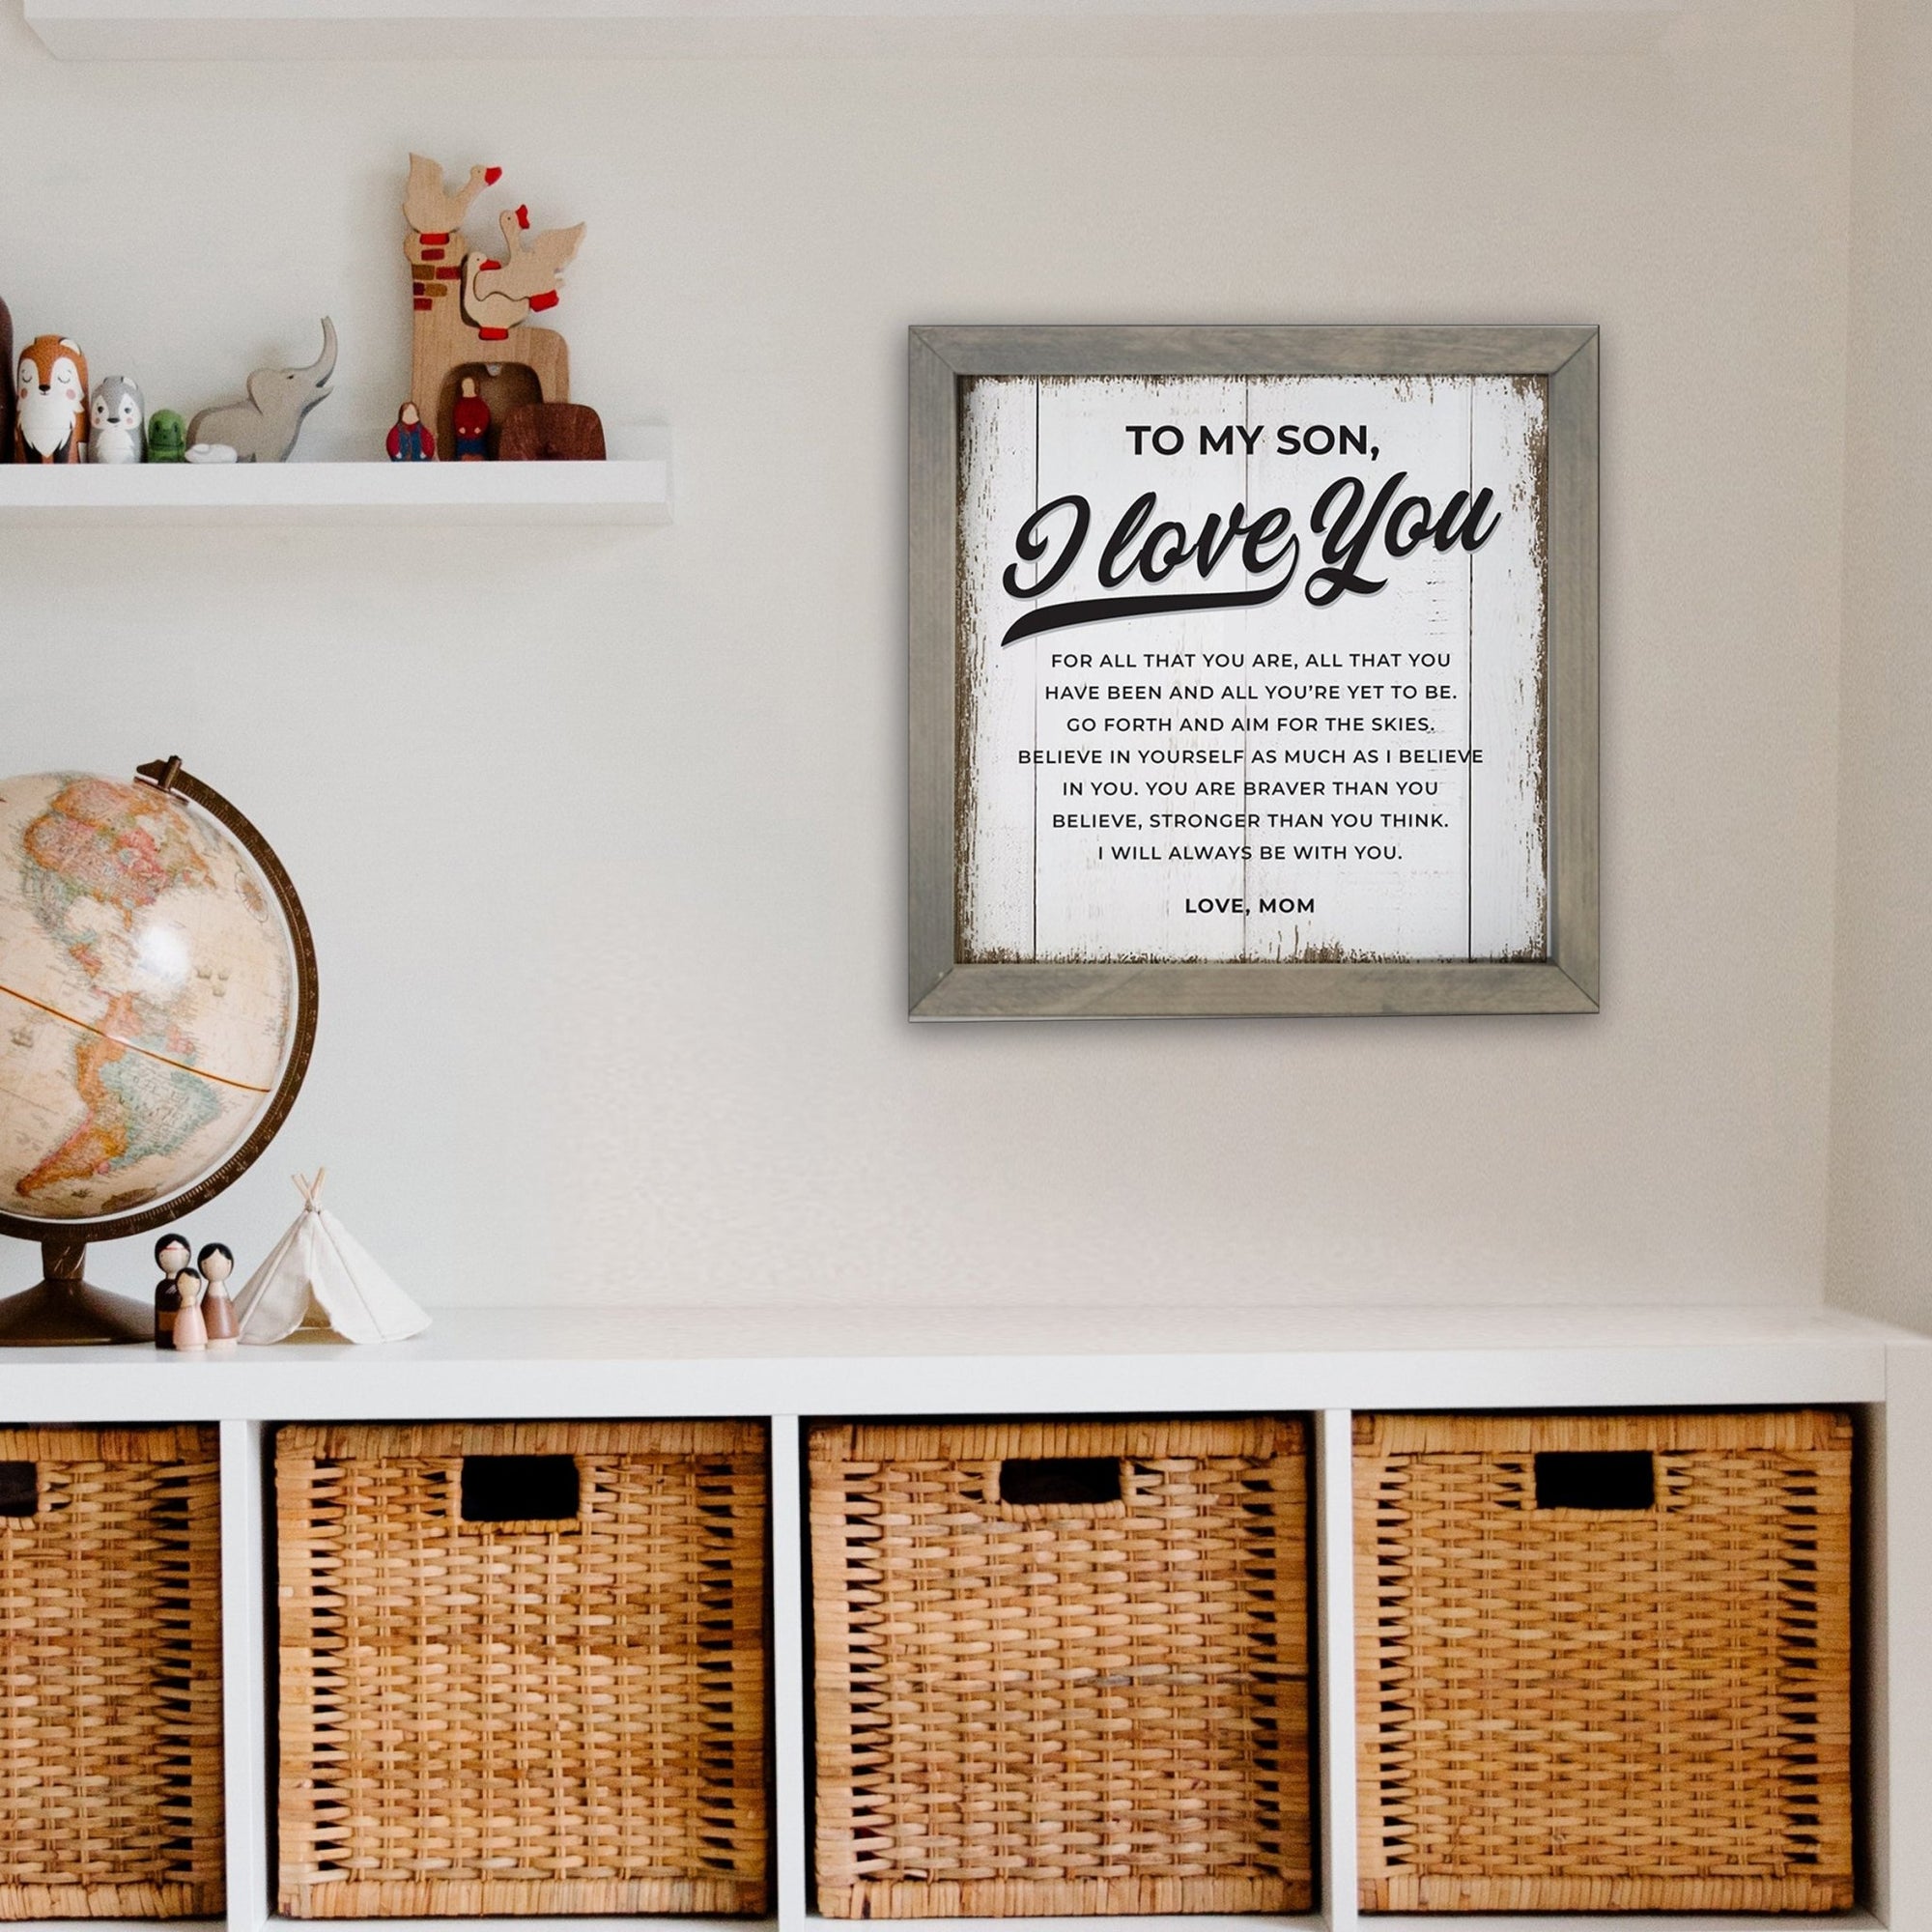 Elegant Baseball Framed Shadow Box Shelf Décor With Inspiring Bible Verses - I Love You - LifeSong Milestones